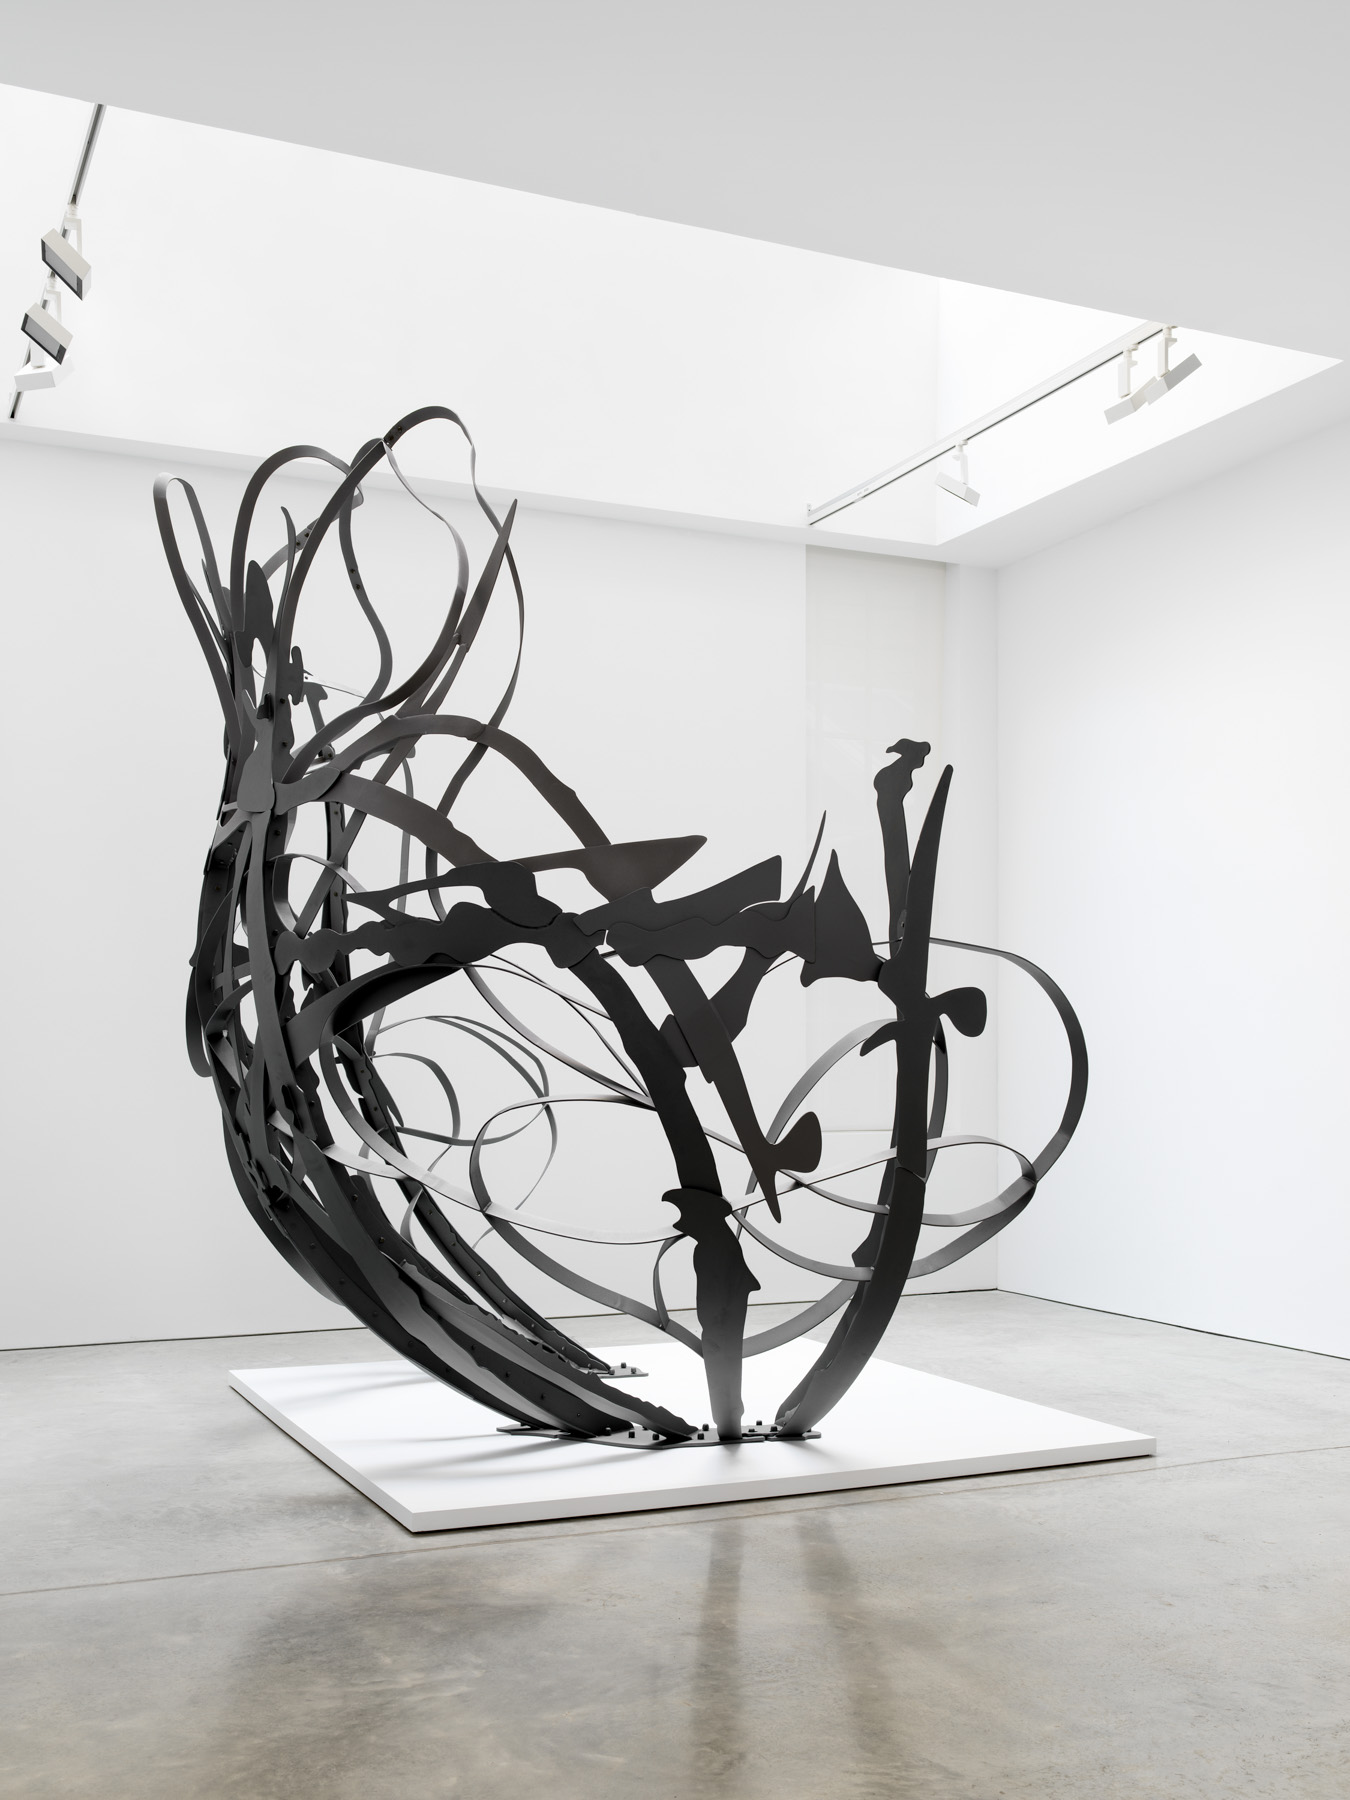 Laser-cut steel sculpture in gallery